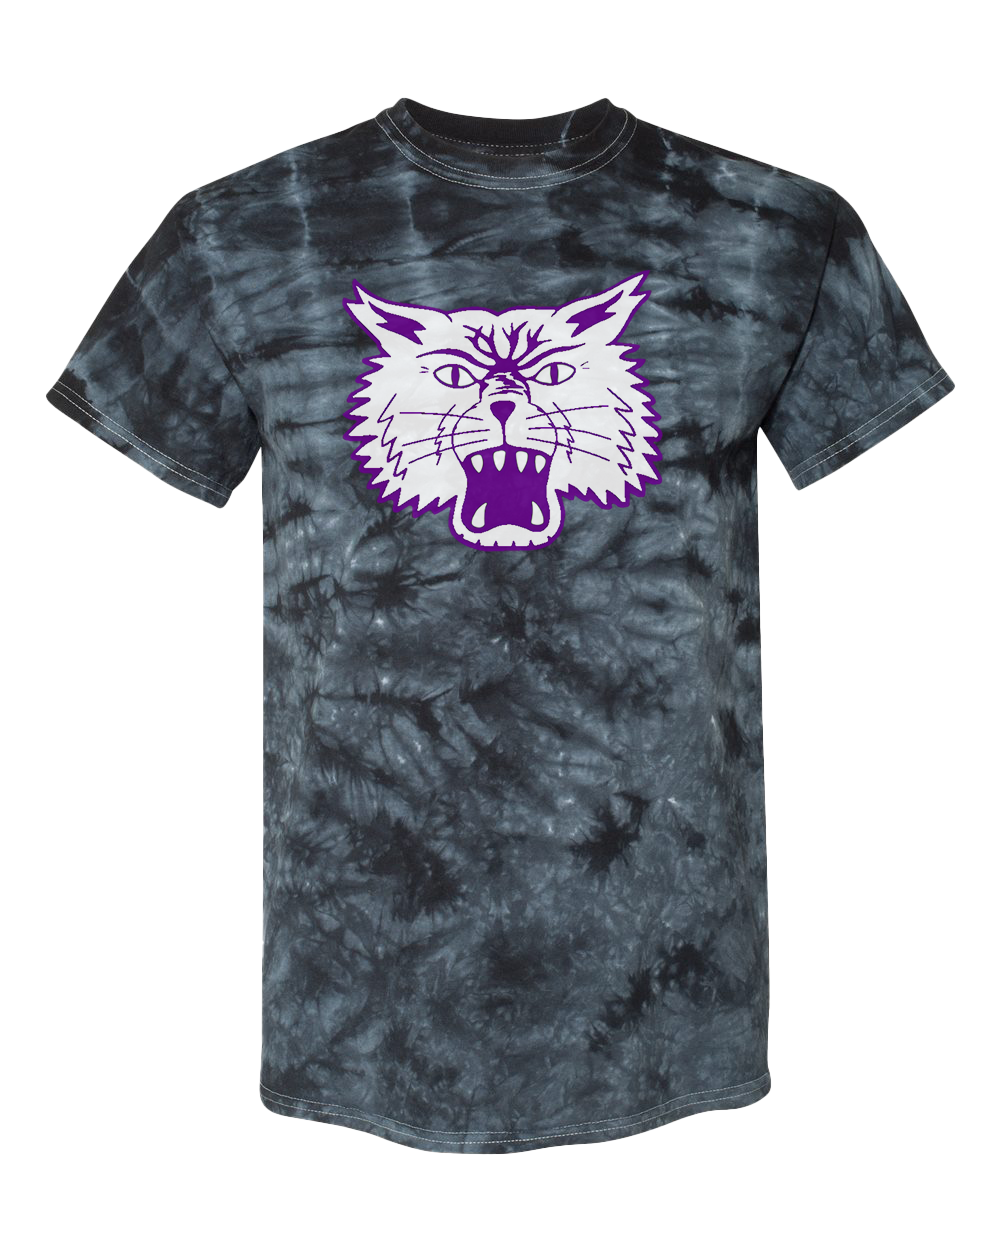 Muncie Central Bearcats Tie-Dye Tshirt - Black